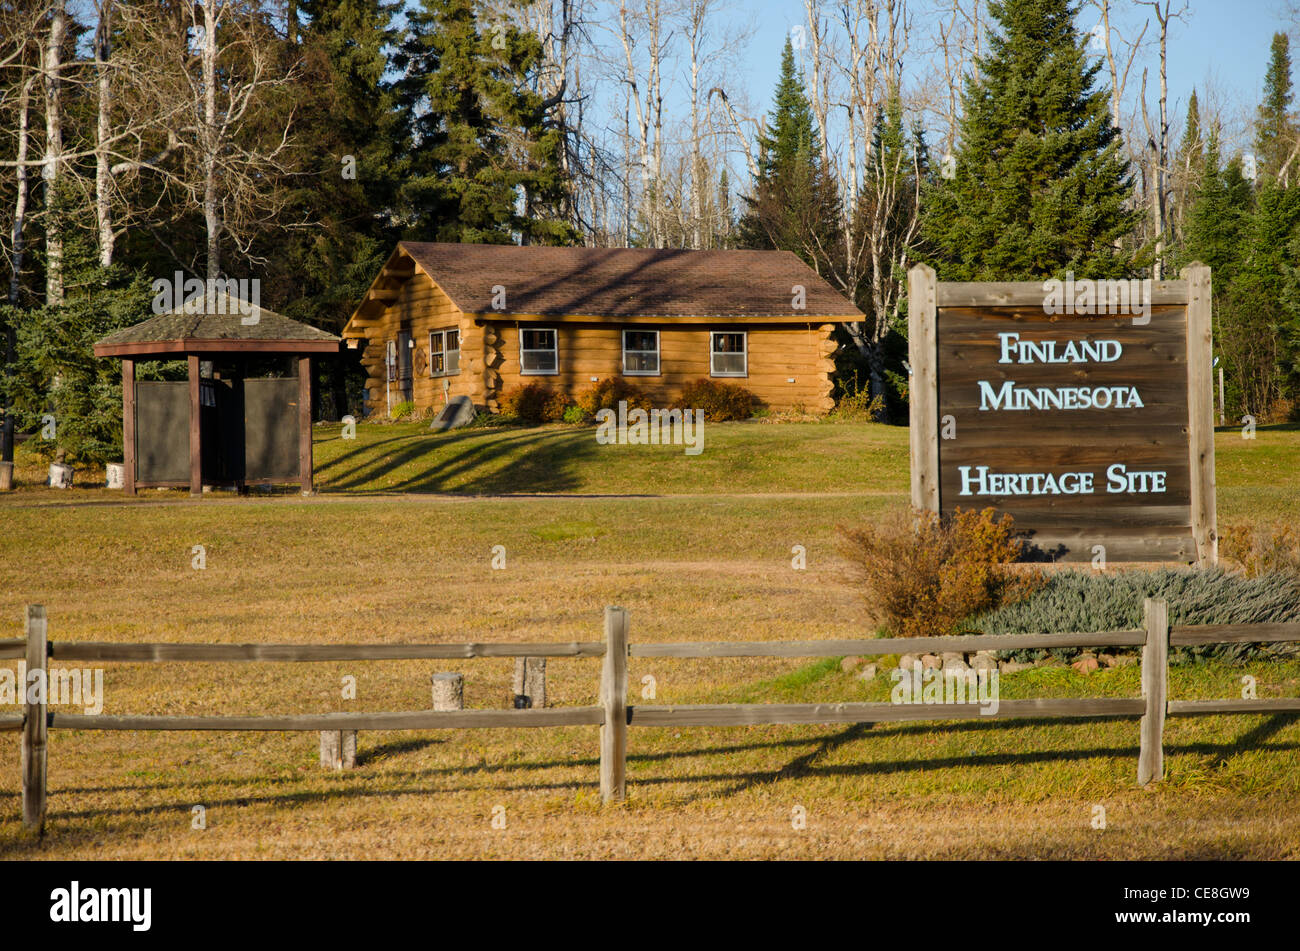 The Finland Minnesota Heritage Site in Finland, Minnesota Stock Photo